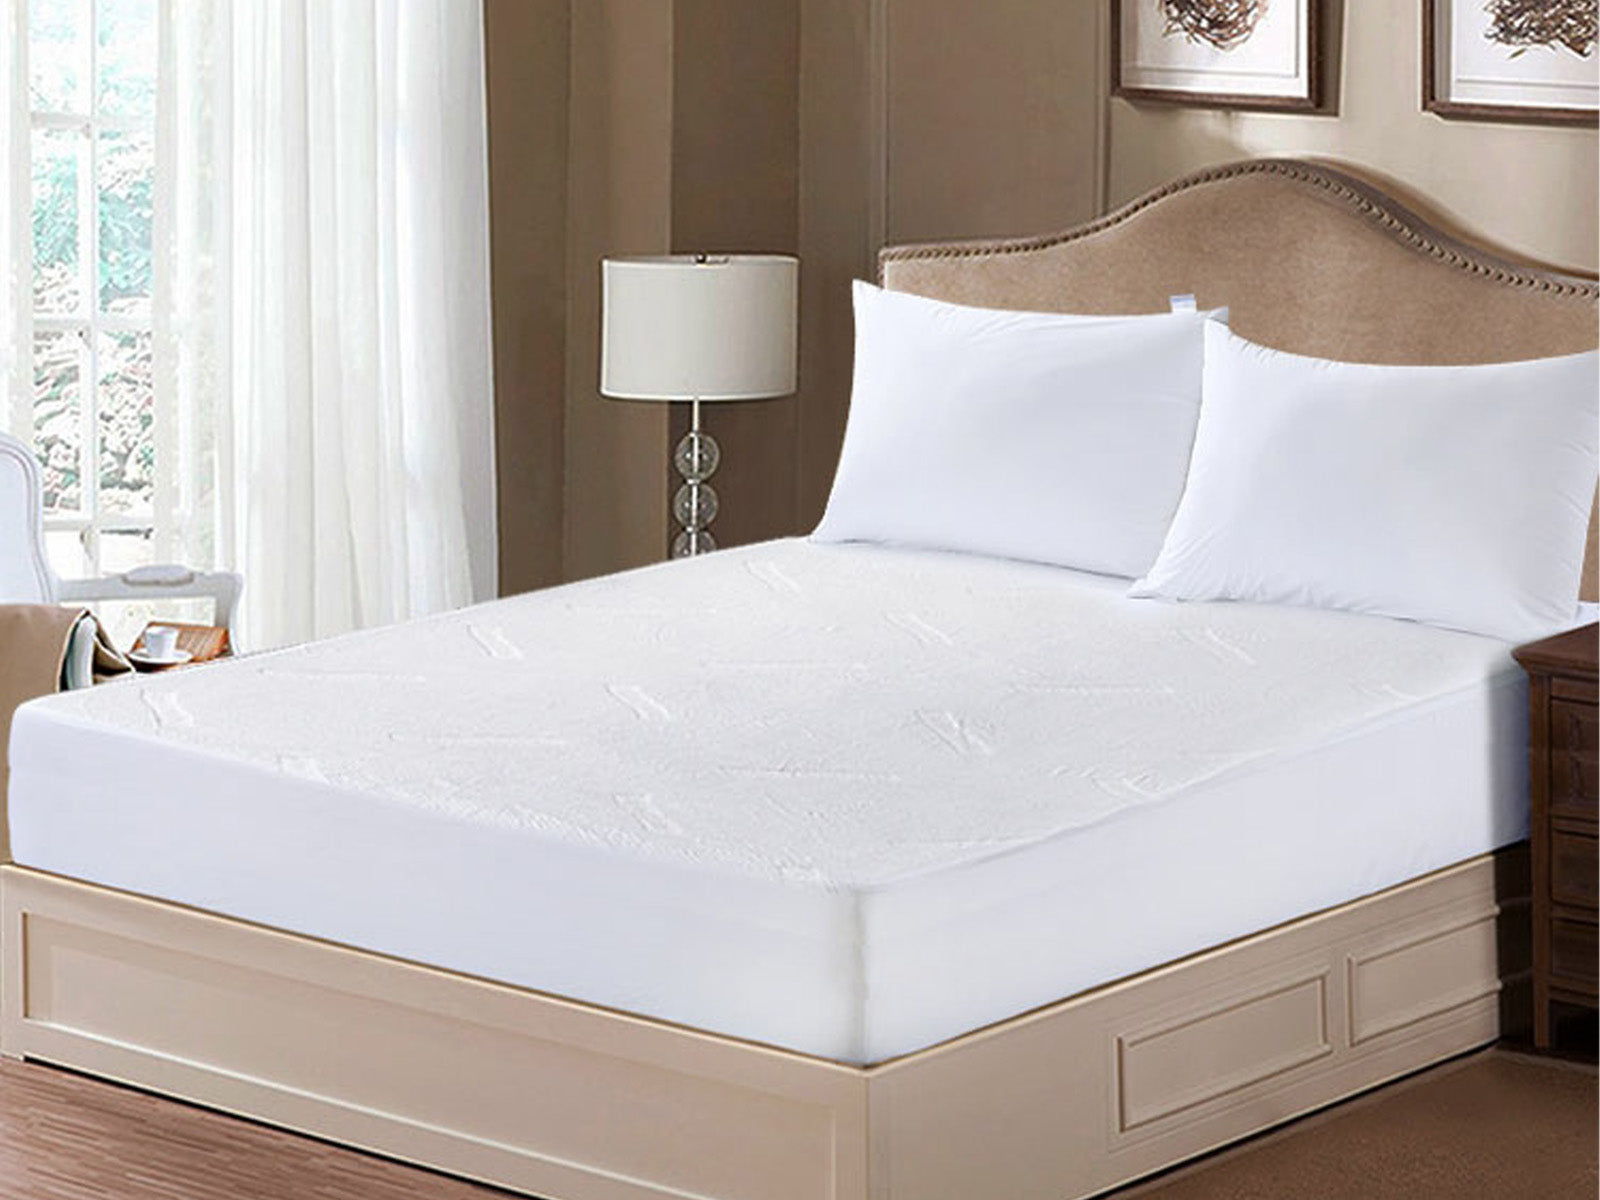 Reaks Protector de colchón impermeable para cama King - Funda de colchón  refrescante con bolsillo profundo ajustado de hasta 18 pulgadas